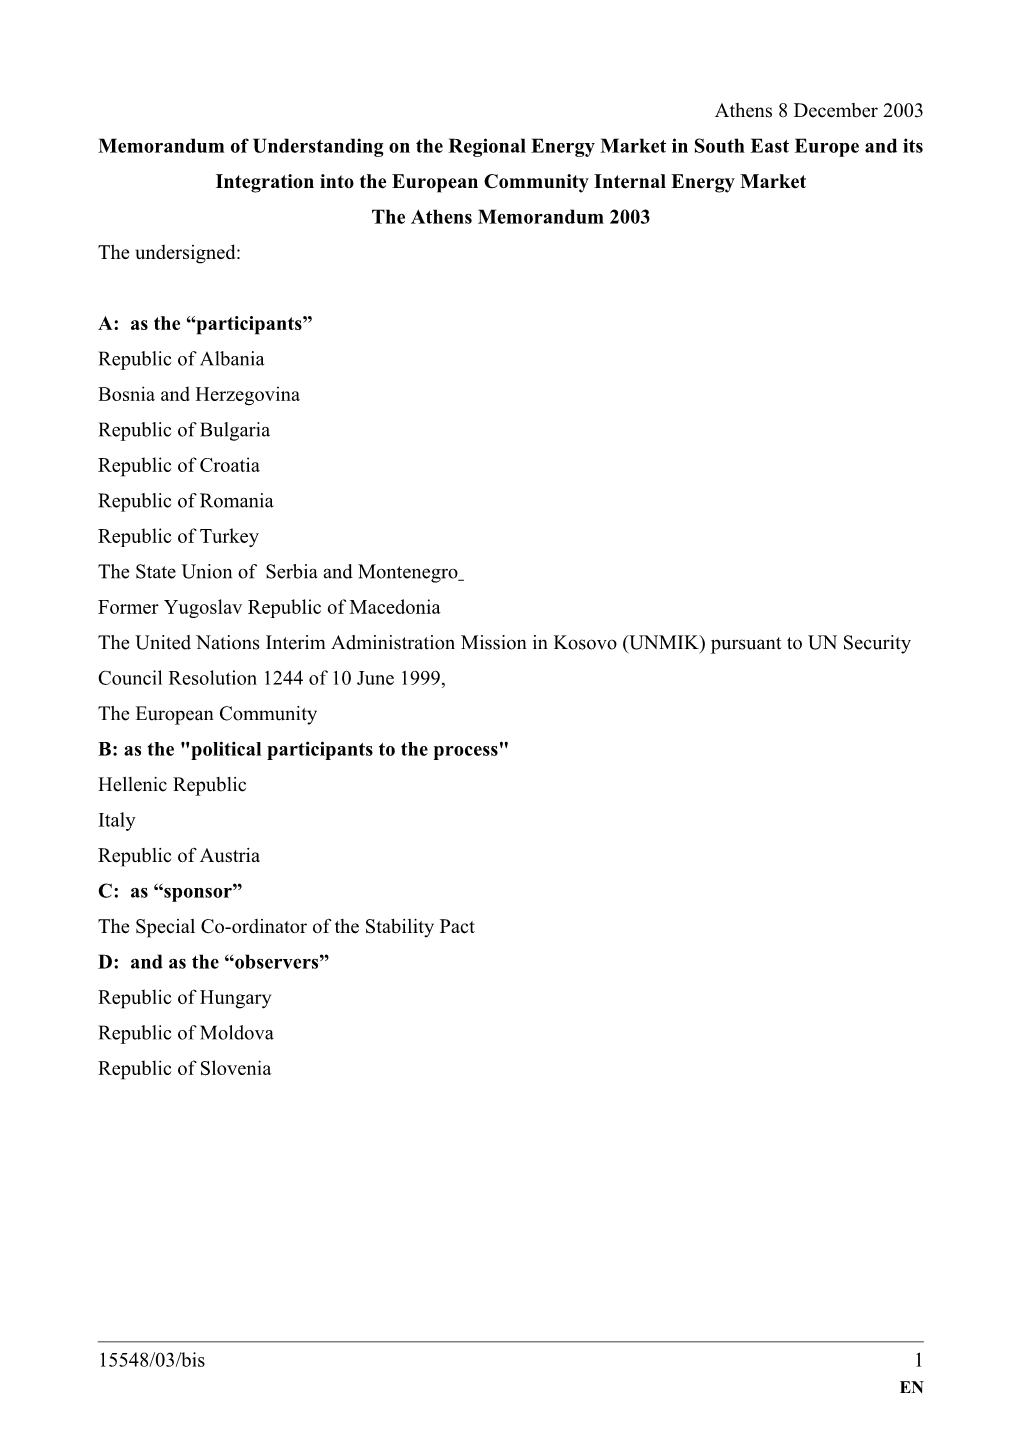 The Athens Memorandum 2003